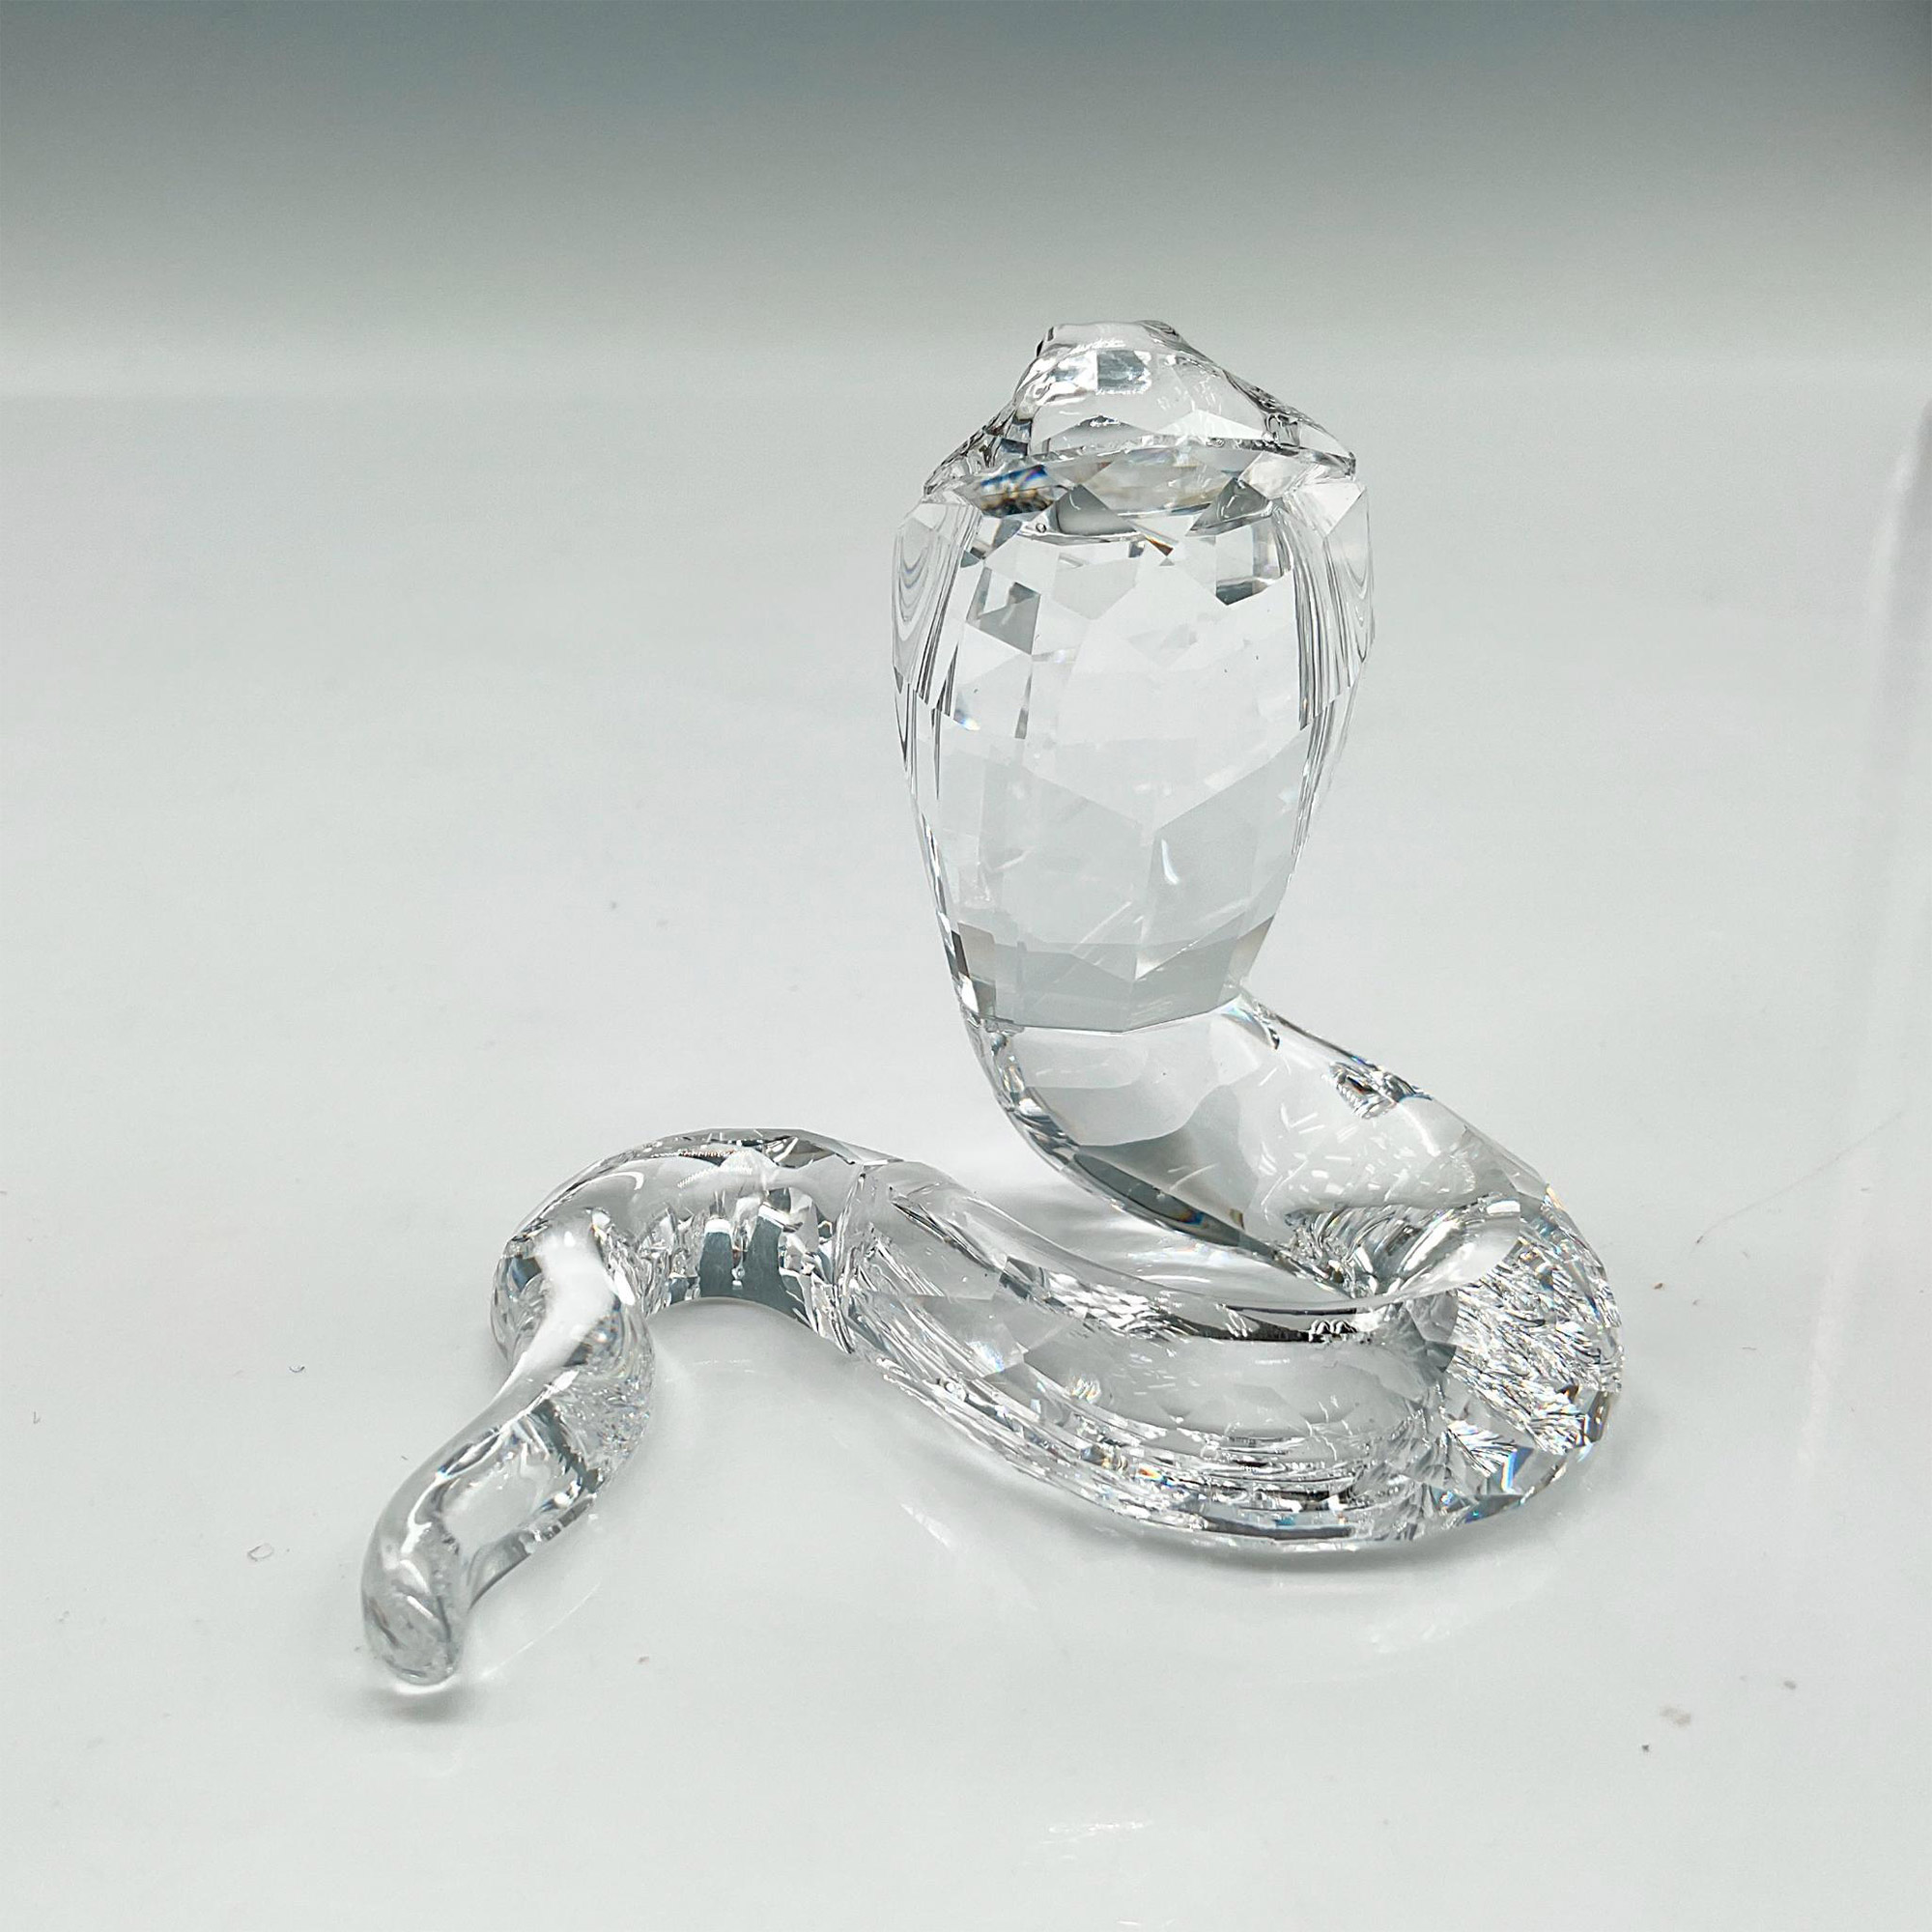 Swarovski Silver Crystal Figurine, Cobra - Image 2 of 4